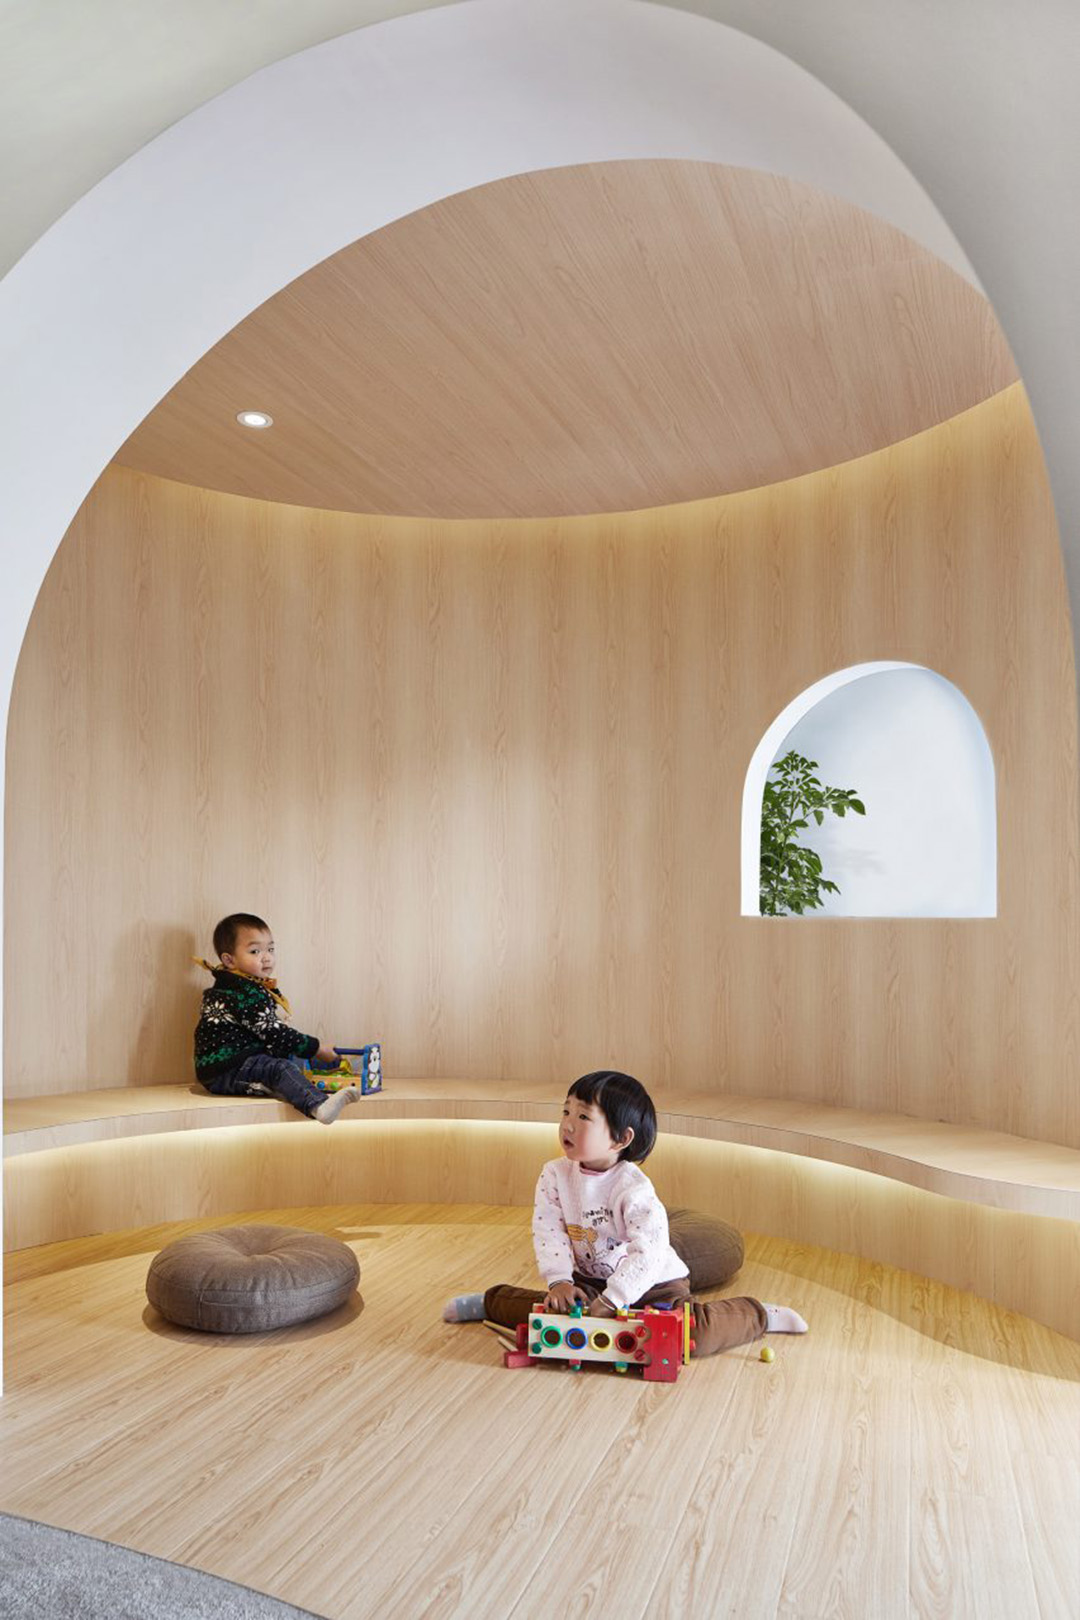 sissis-wonderland-muxin-studio-interiors-libraries-children-shanghai_dezeen_2364_col_11-852x1278.jpg